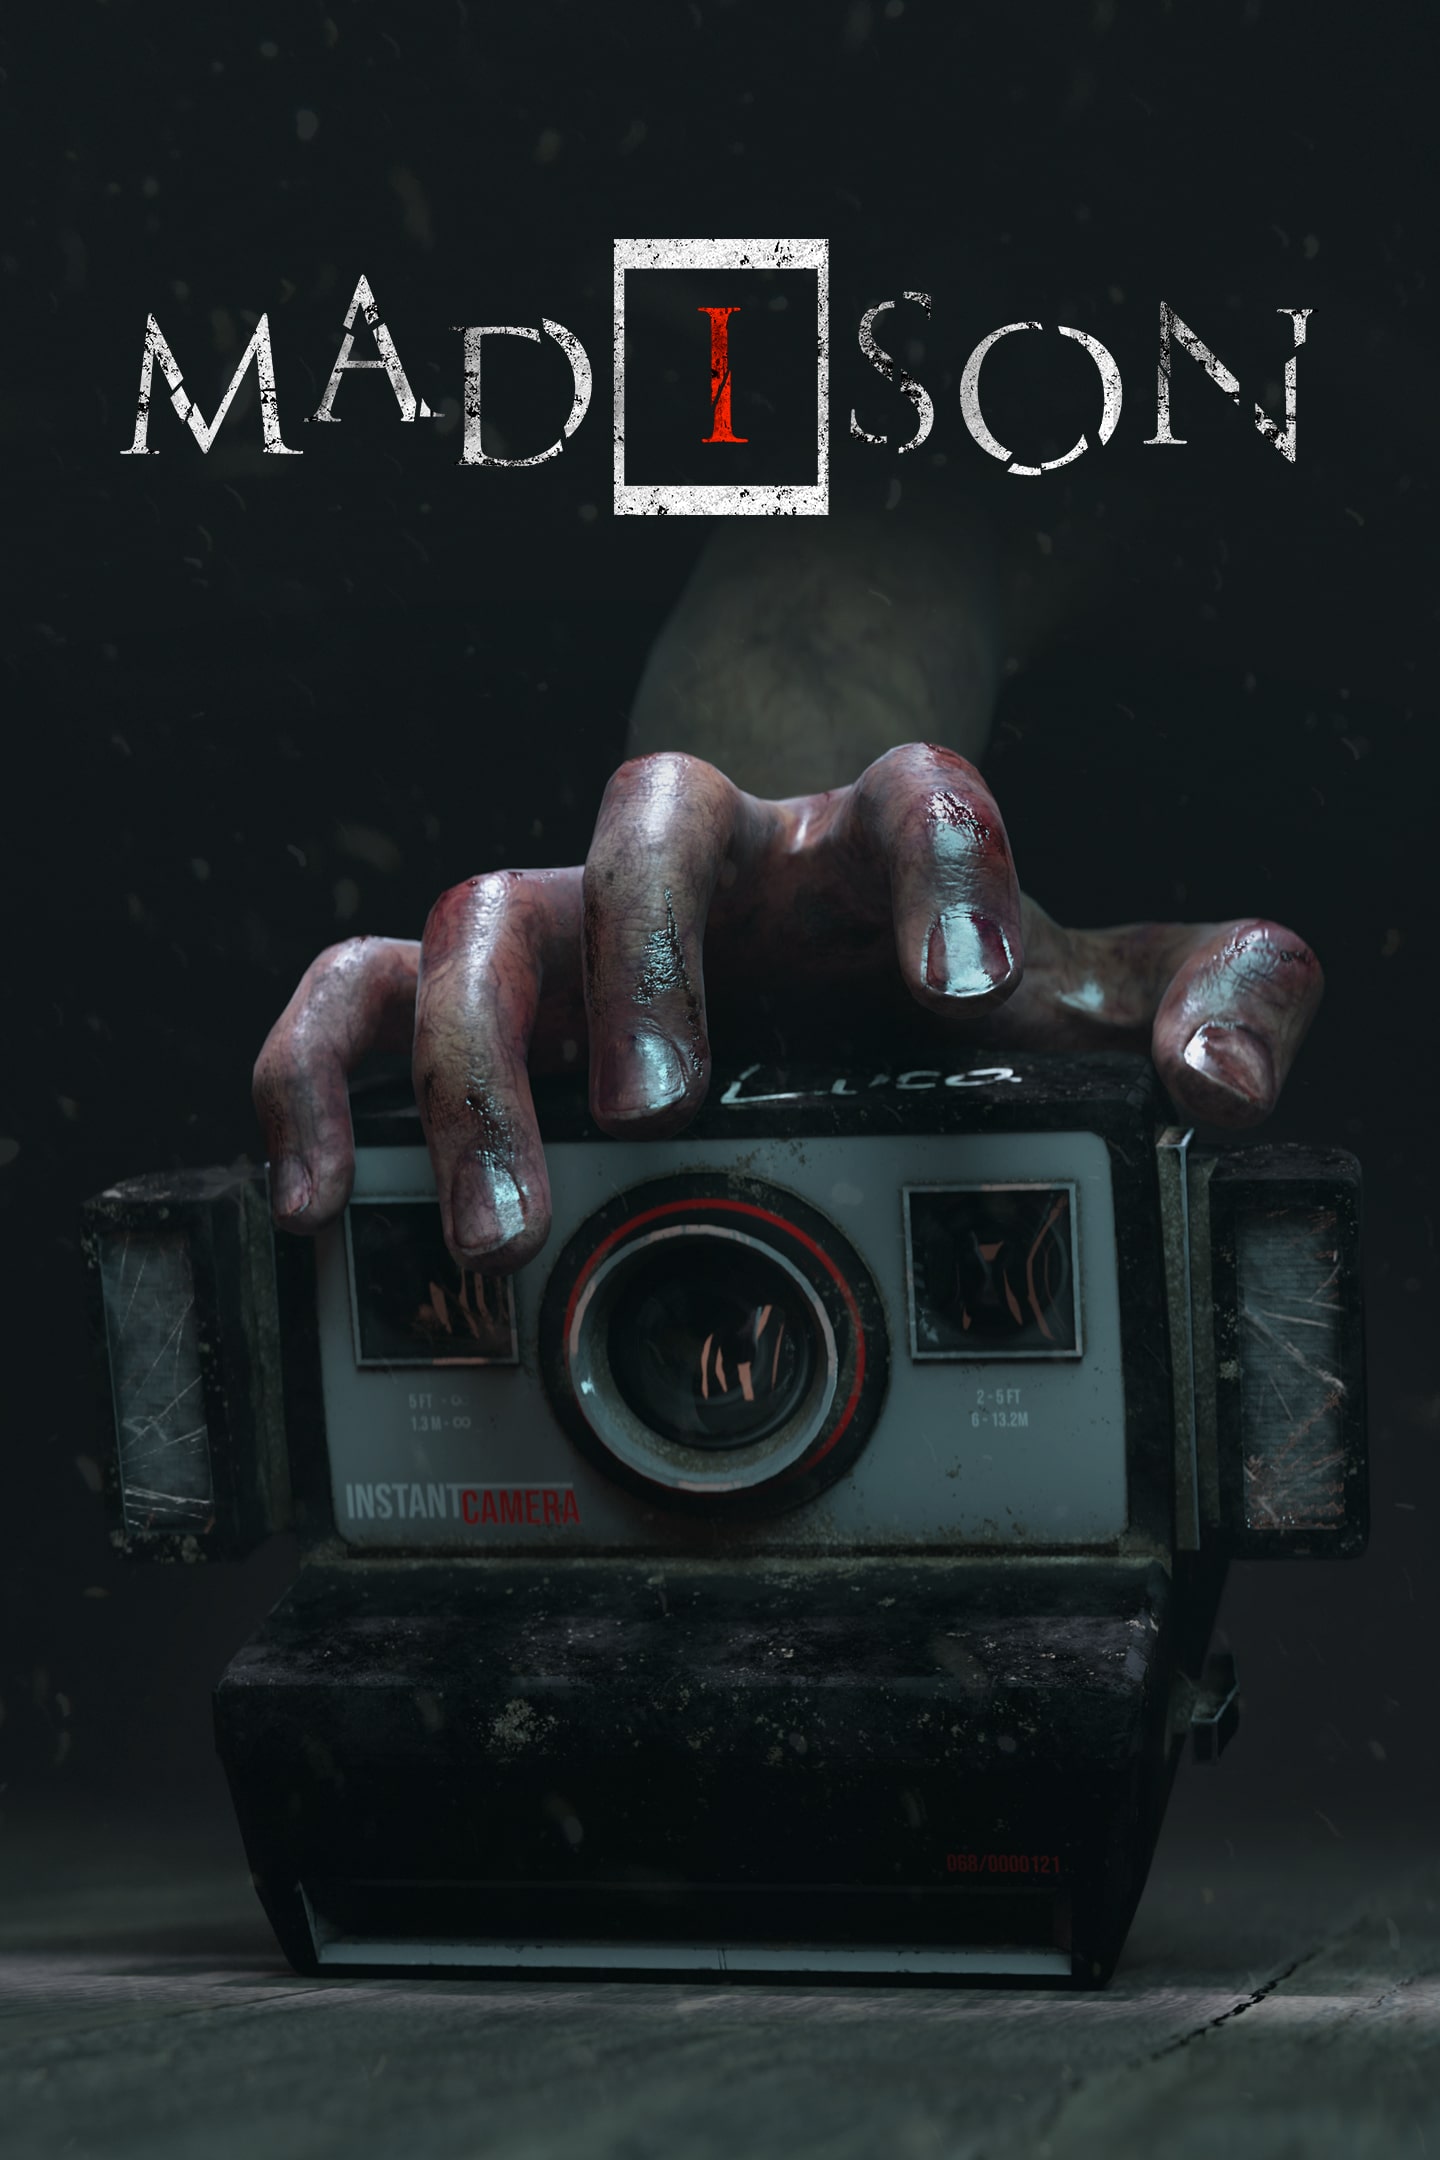 Madison Possessed Edition (PS5)